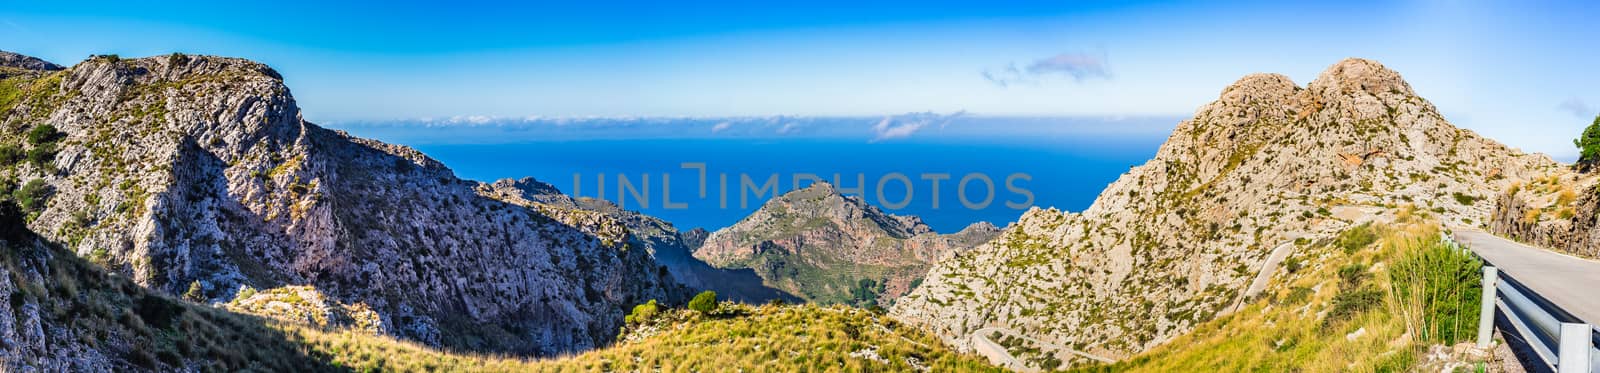 Idyllic view of mountain landscape panorama on Majorca island, Mediterranean Sea Coast Spain